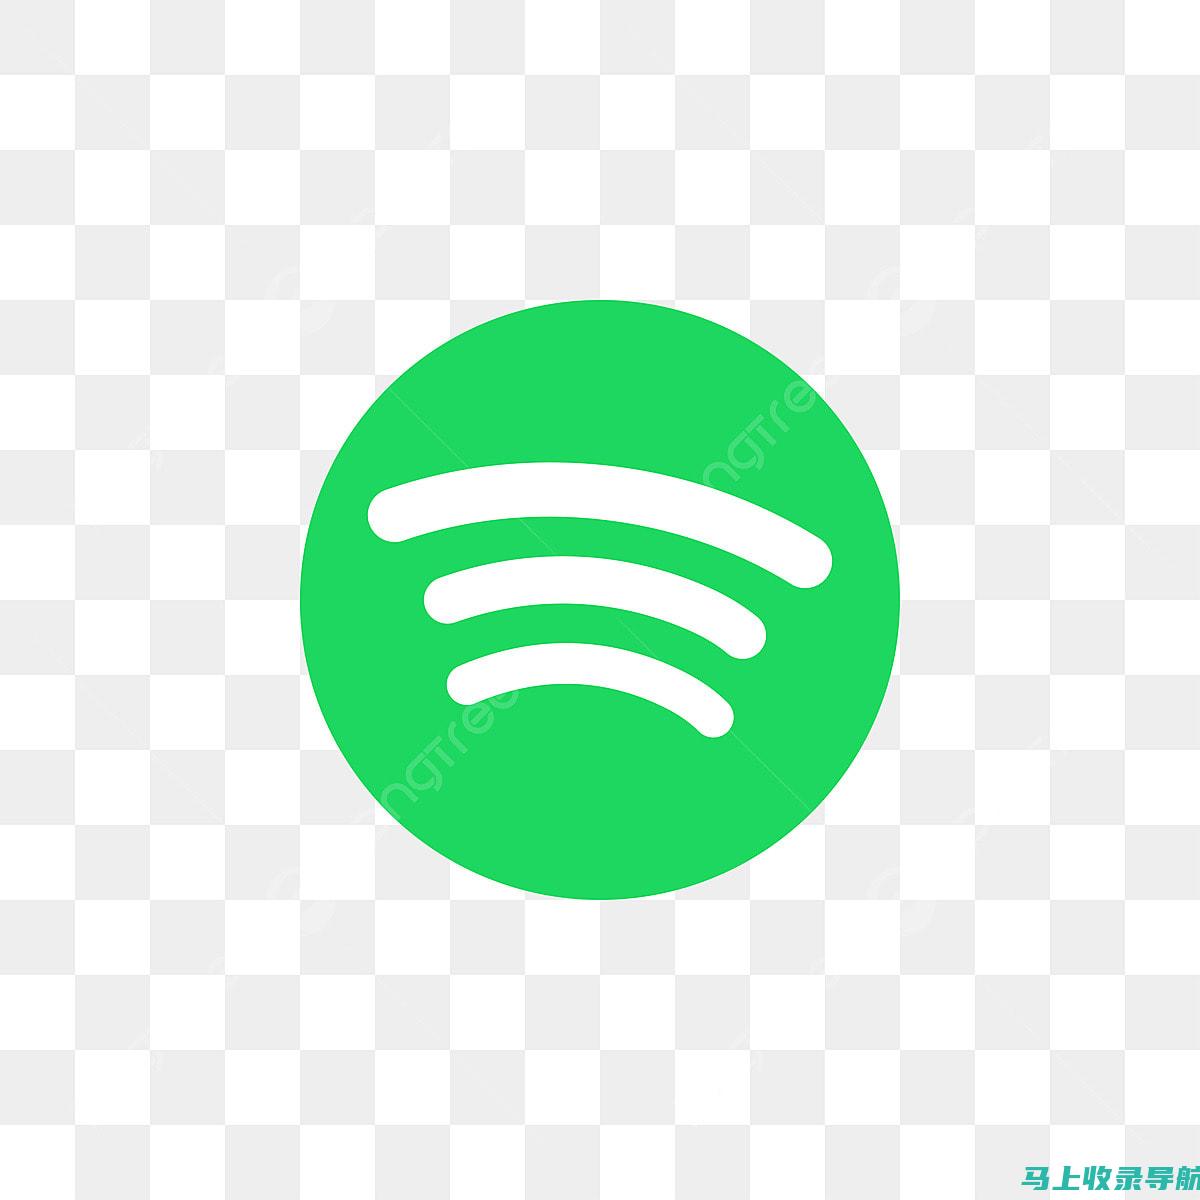 Spotify：Spotify 是一个流媒体音乐服务，提供付费和免费的交响乐下载。该服务提供各种格式的下载，包括 MP3 和 OGG。